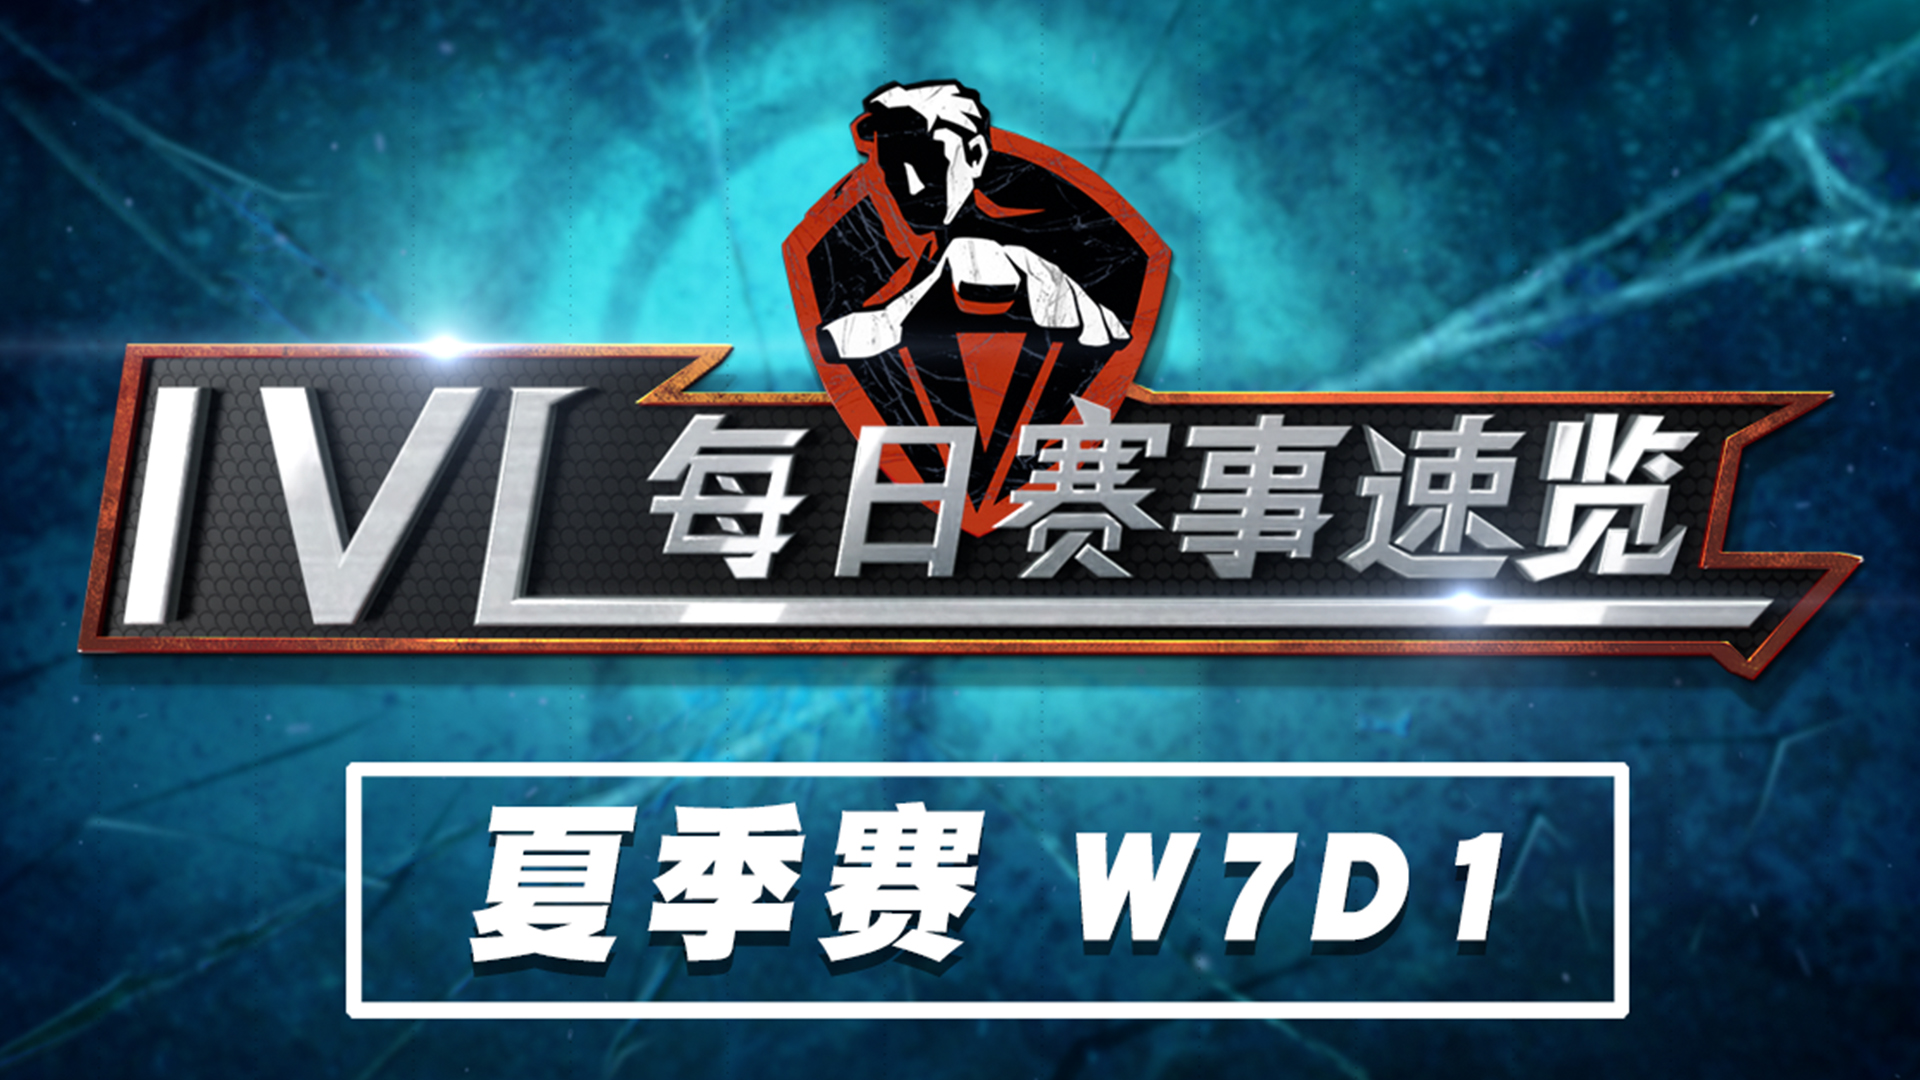 【2020IVL】夏季赛W7D1 赛事速览